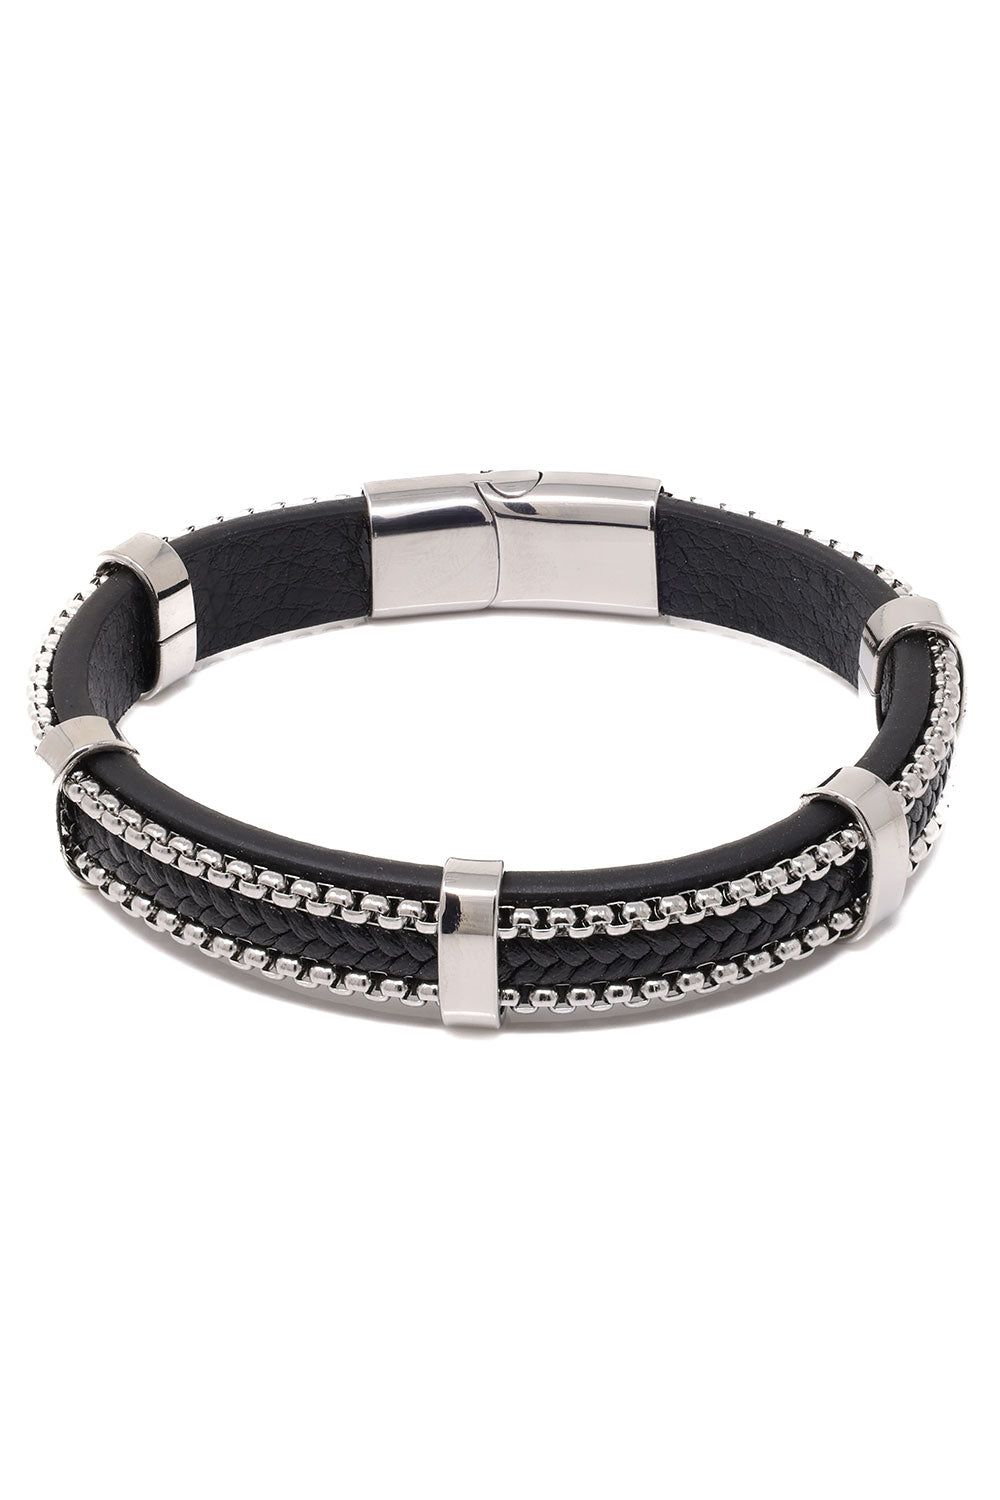 Barabas Unisex Braided Leather and Stones Bangle Bracelets 4BMS02 Black Silver